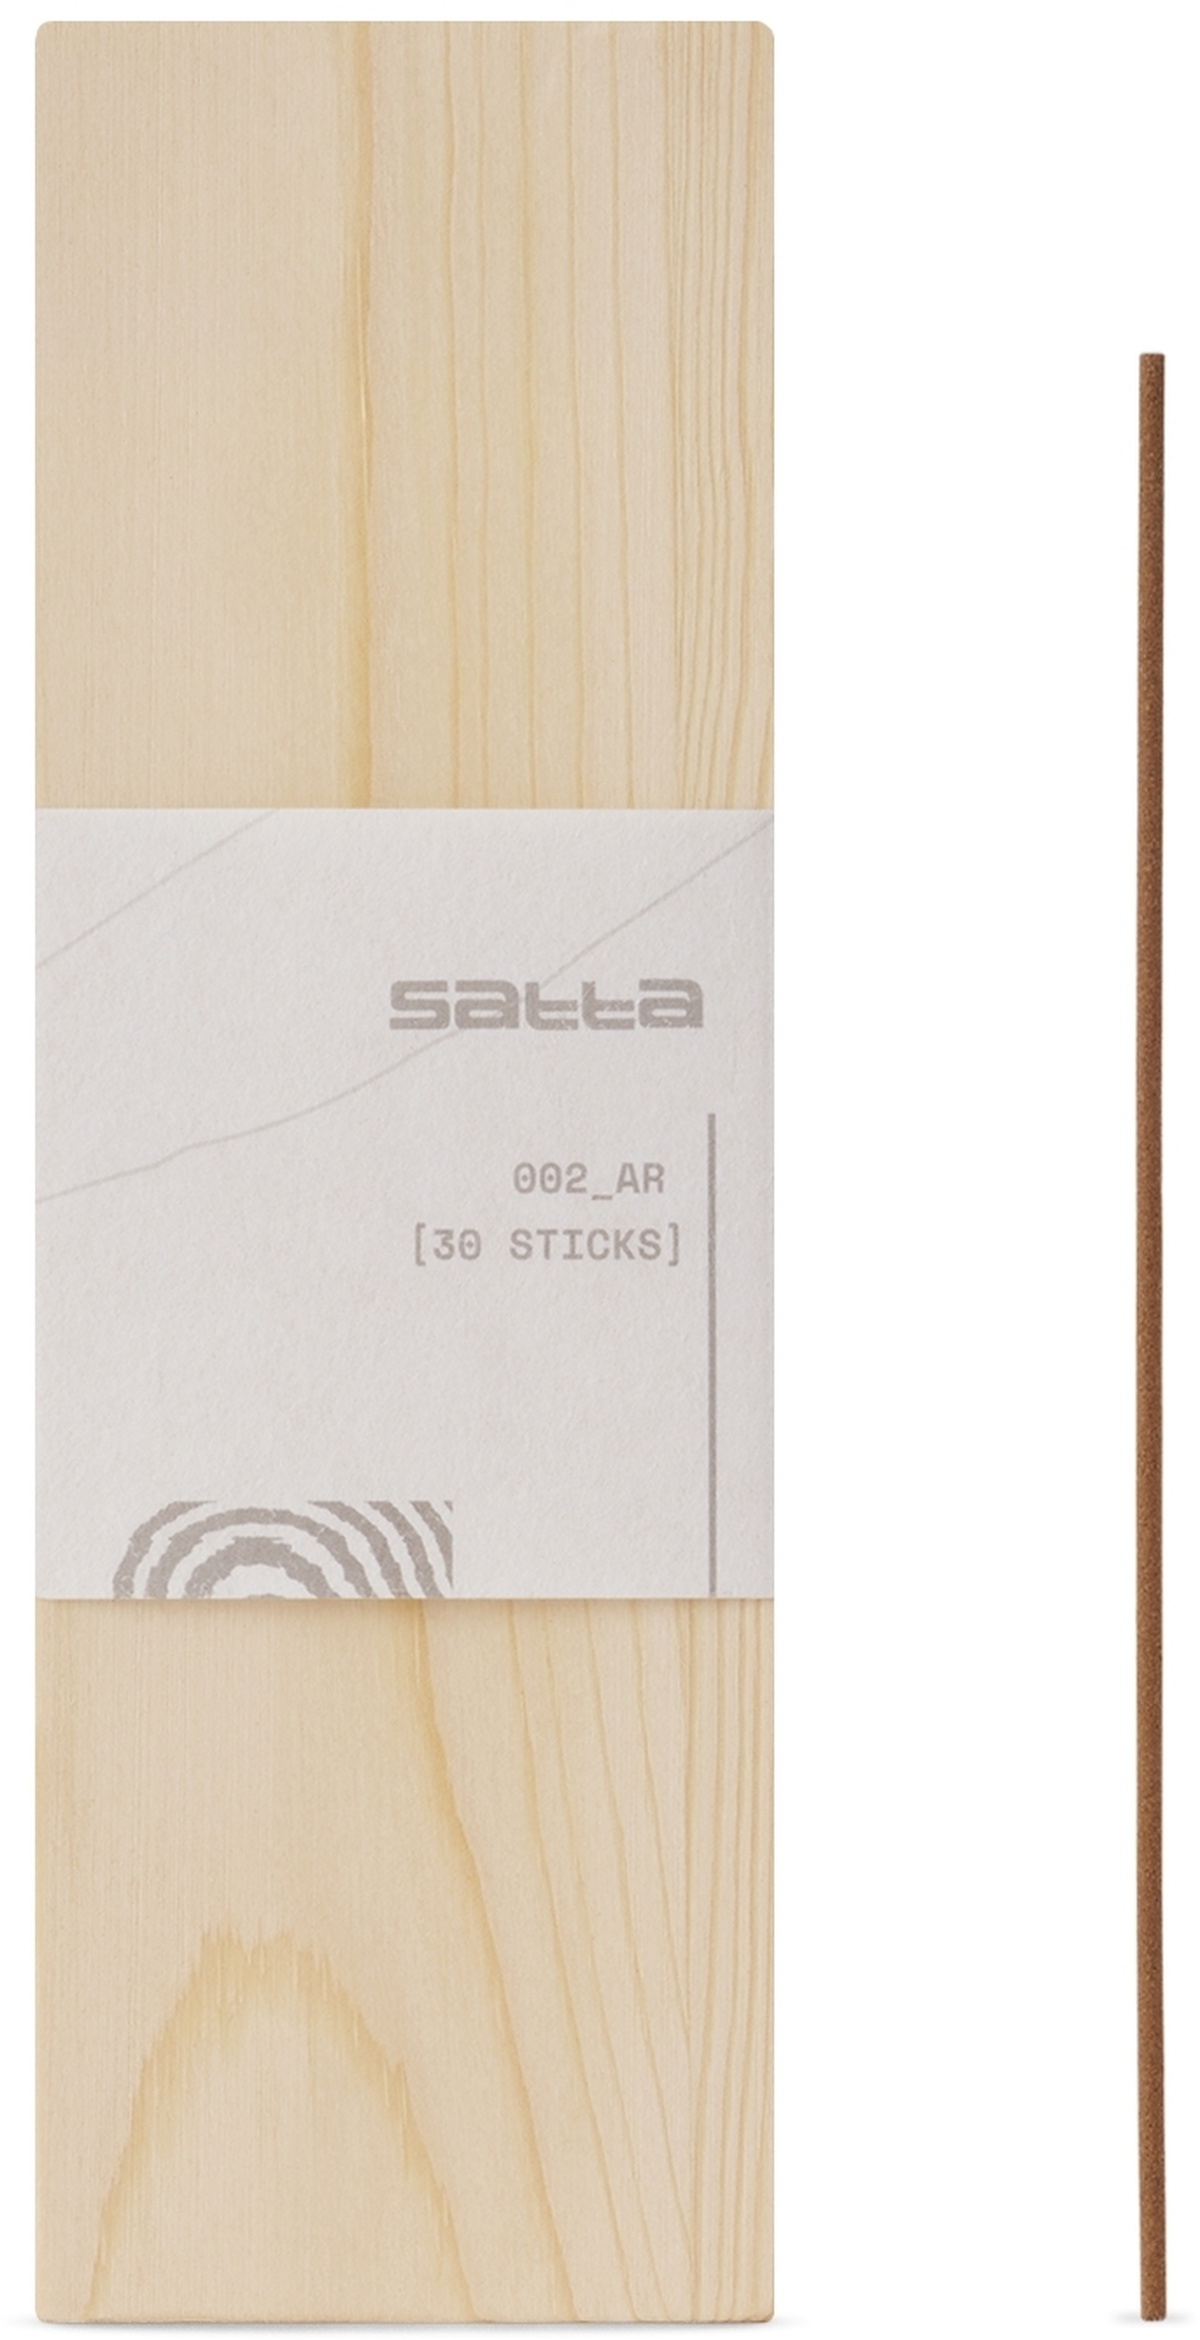 Satta 002_AR Incense Sticks, 30 pcs